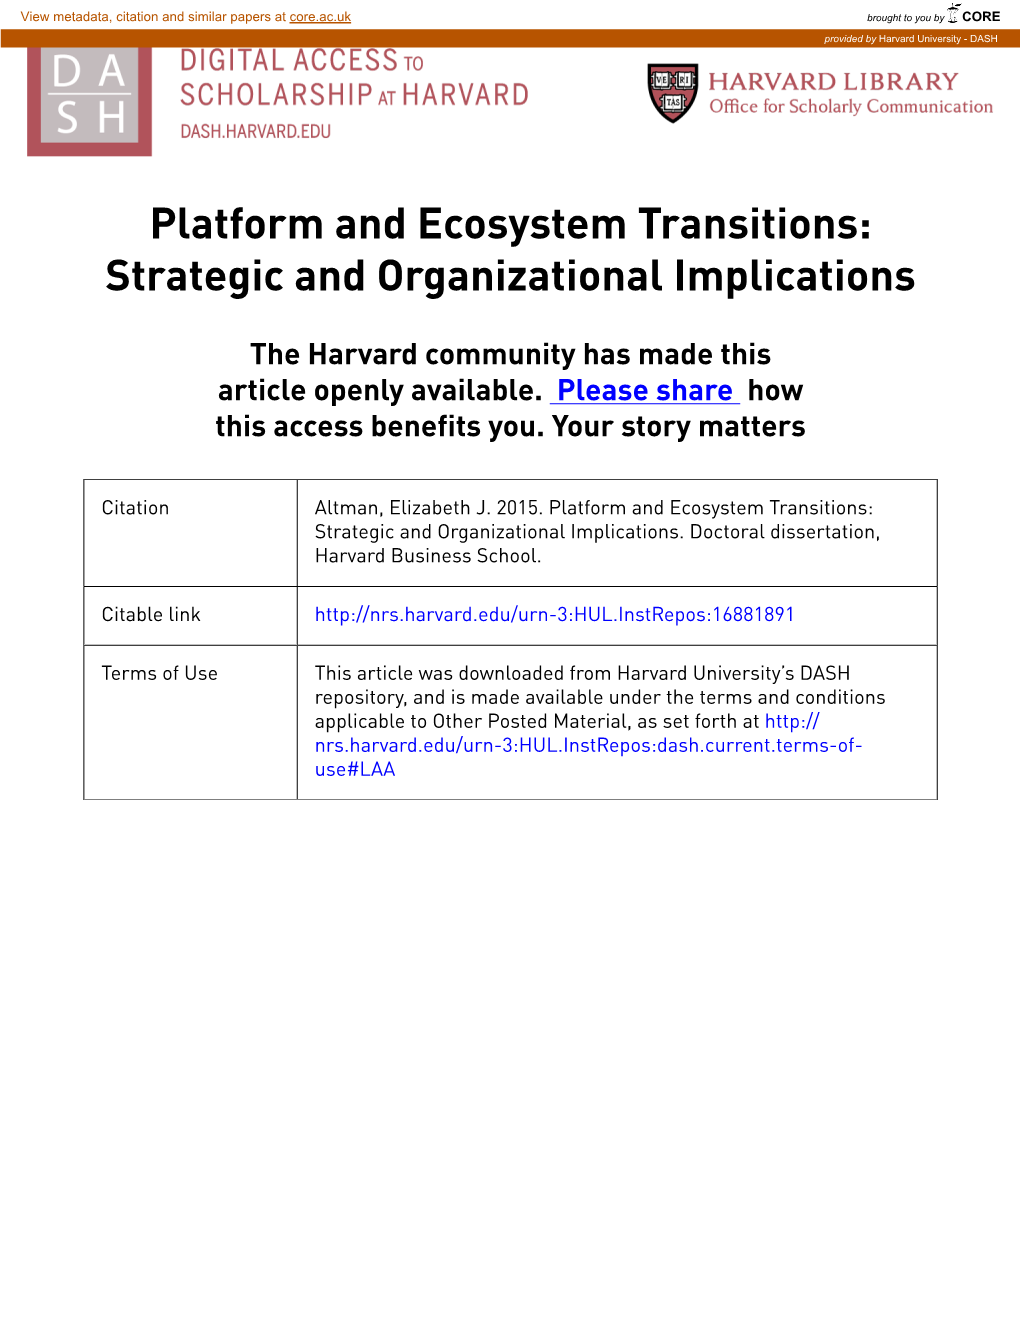 Platform and Ecosystem Transitions: Strategic and Organizational Implications